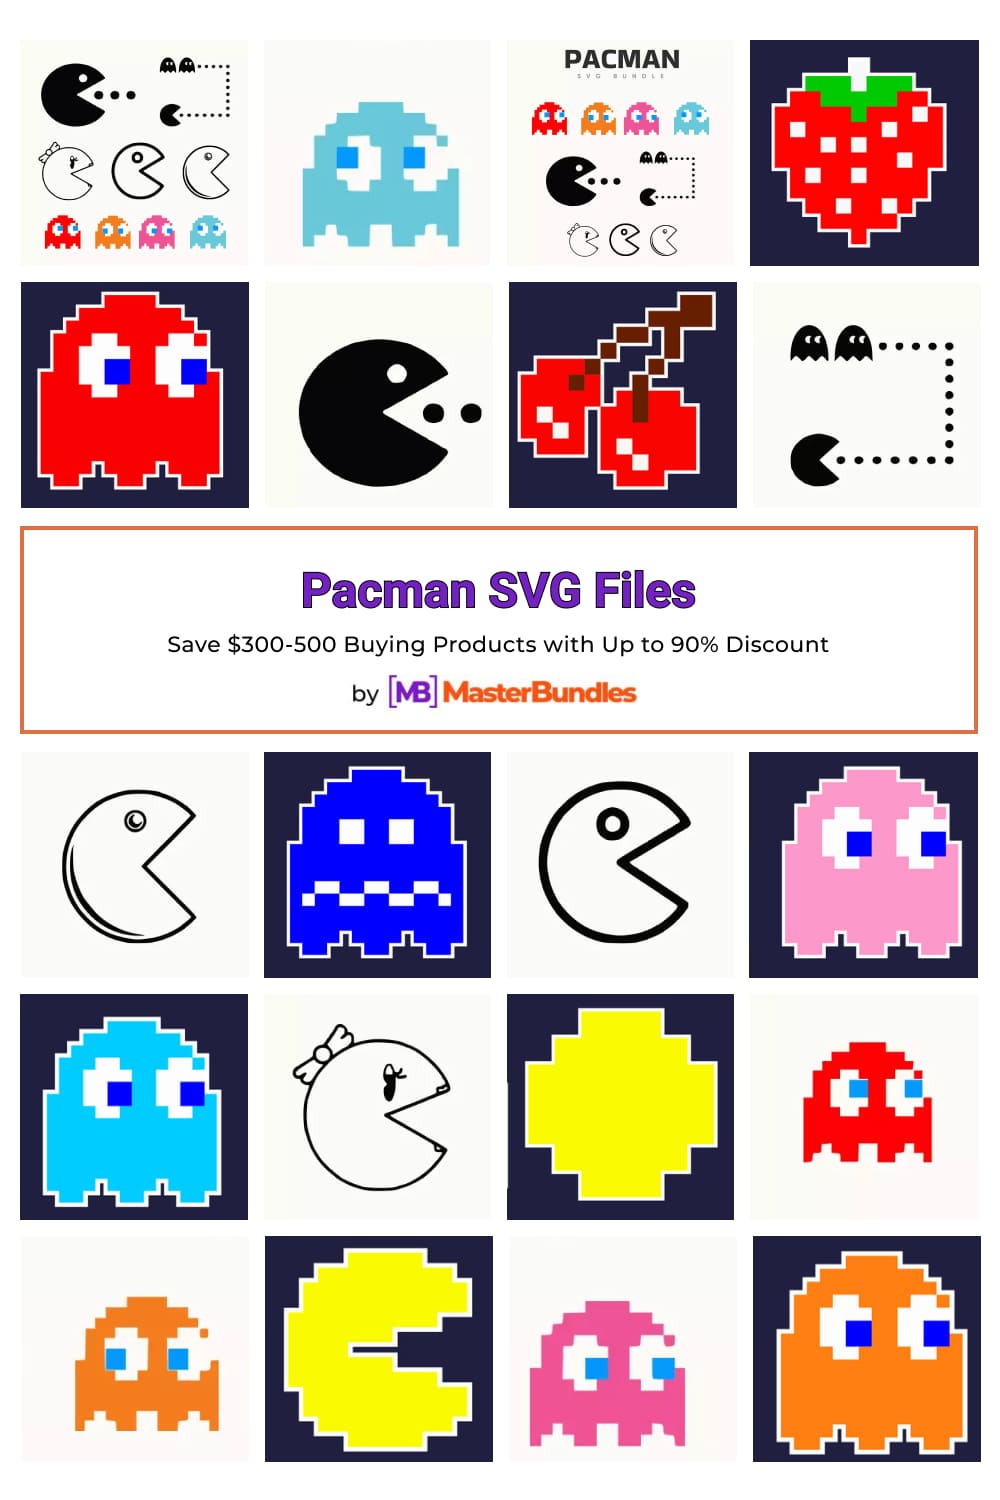 Pacman SVG Files Pinterest image.